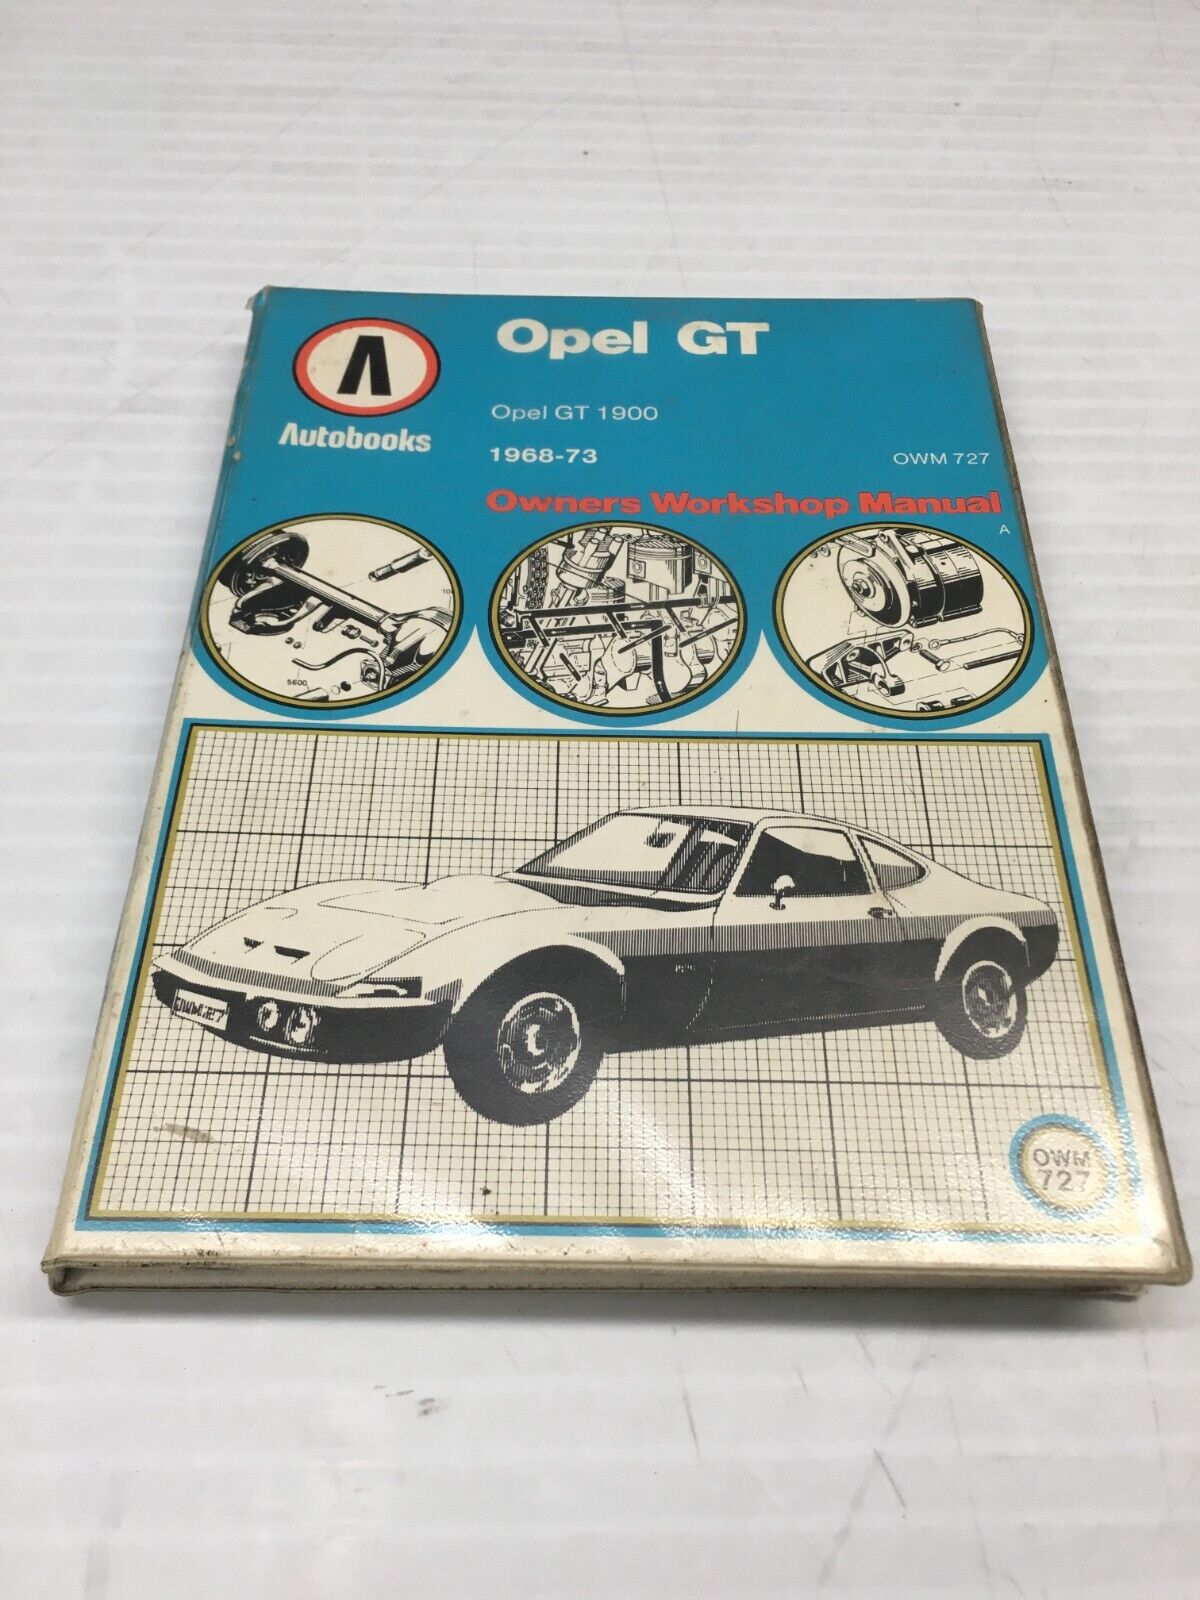 OPEL GT 1900 OWNER'S WORKSHOP MANUAL 1968 - 1973 Kenneth Ball Autobook Hardback